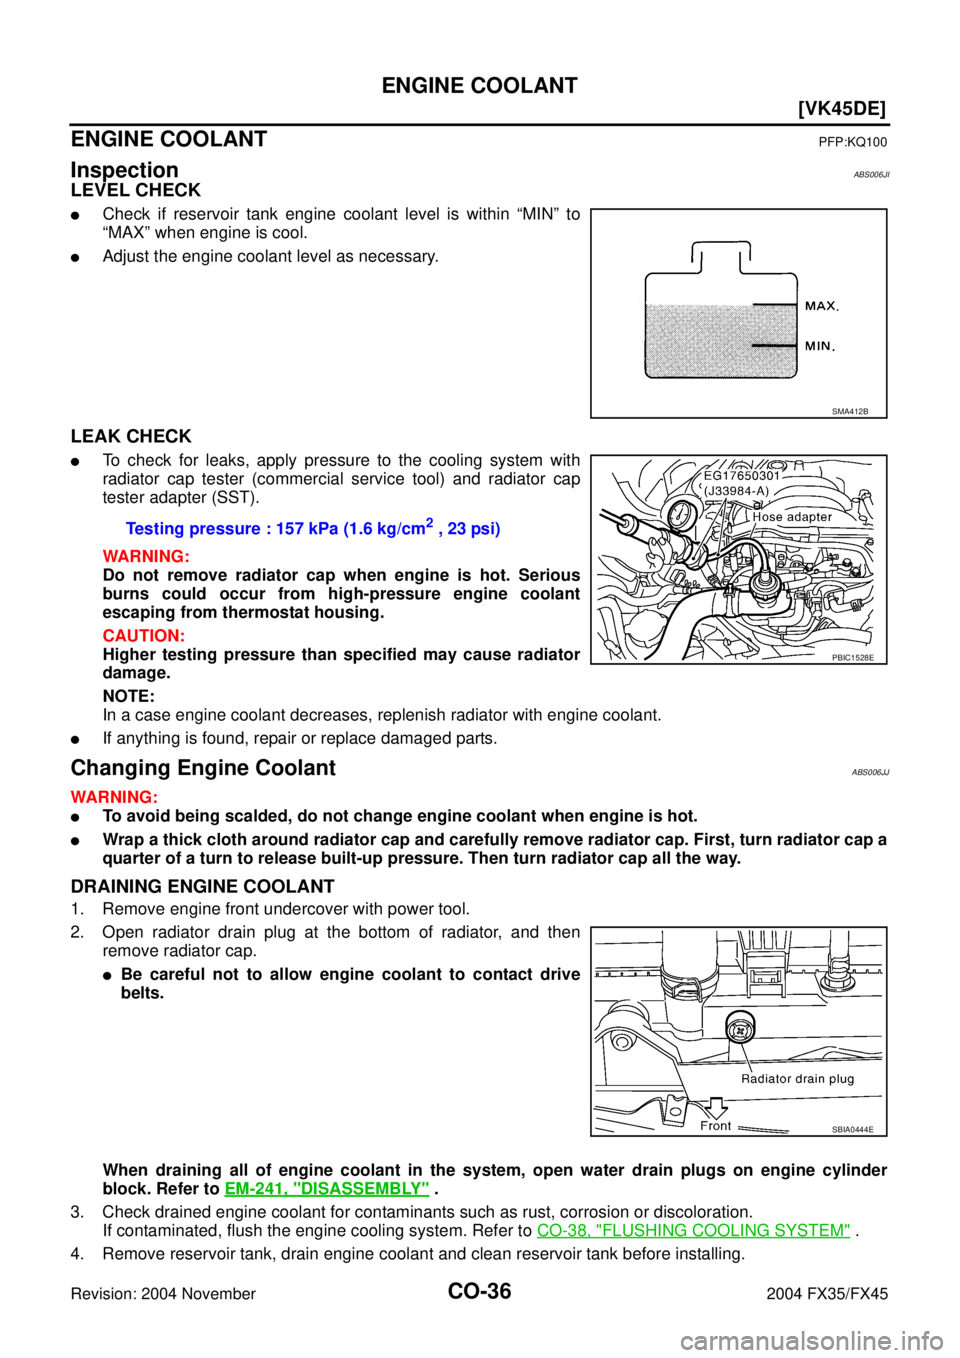 INFINITI FX35 2004  Service Manual CO-36
[VK45DE]
ENGINE COOLANT
Revision: 2004 November 2004 FX35/FX45
ENGINE COOLANTPFP:KQ100
InspectionABS006JI
LEVEL CHECK
Check if reservoir tank engine coolant level is within “MIN” to
“MAX�